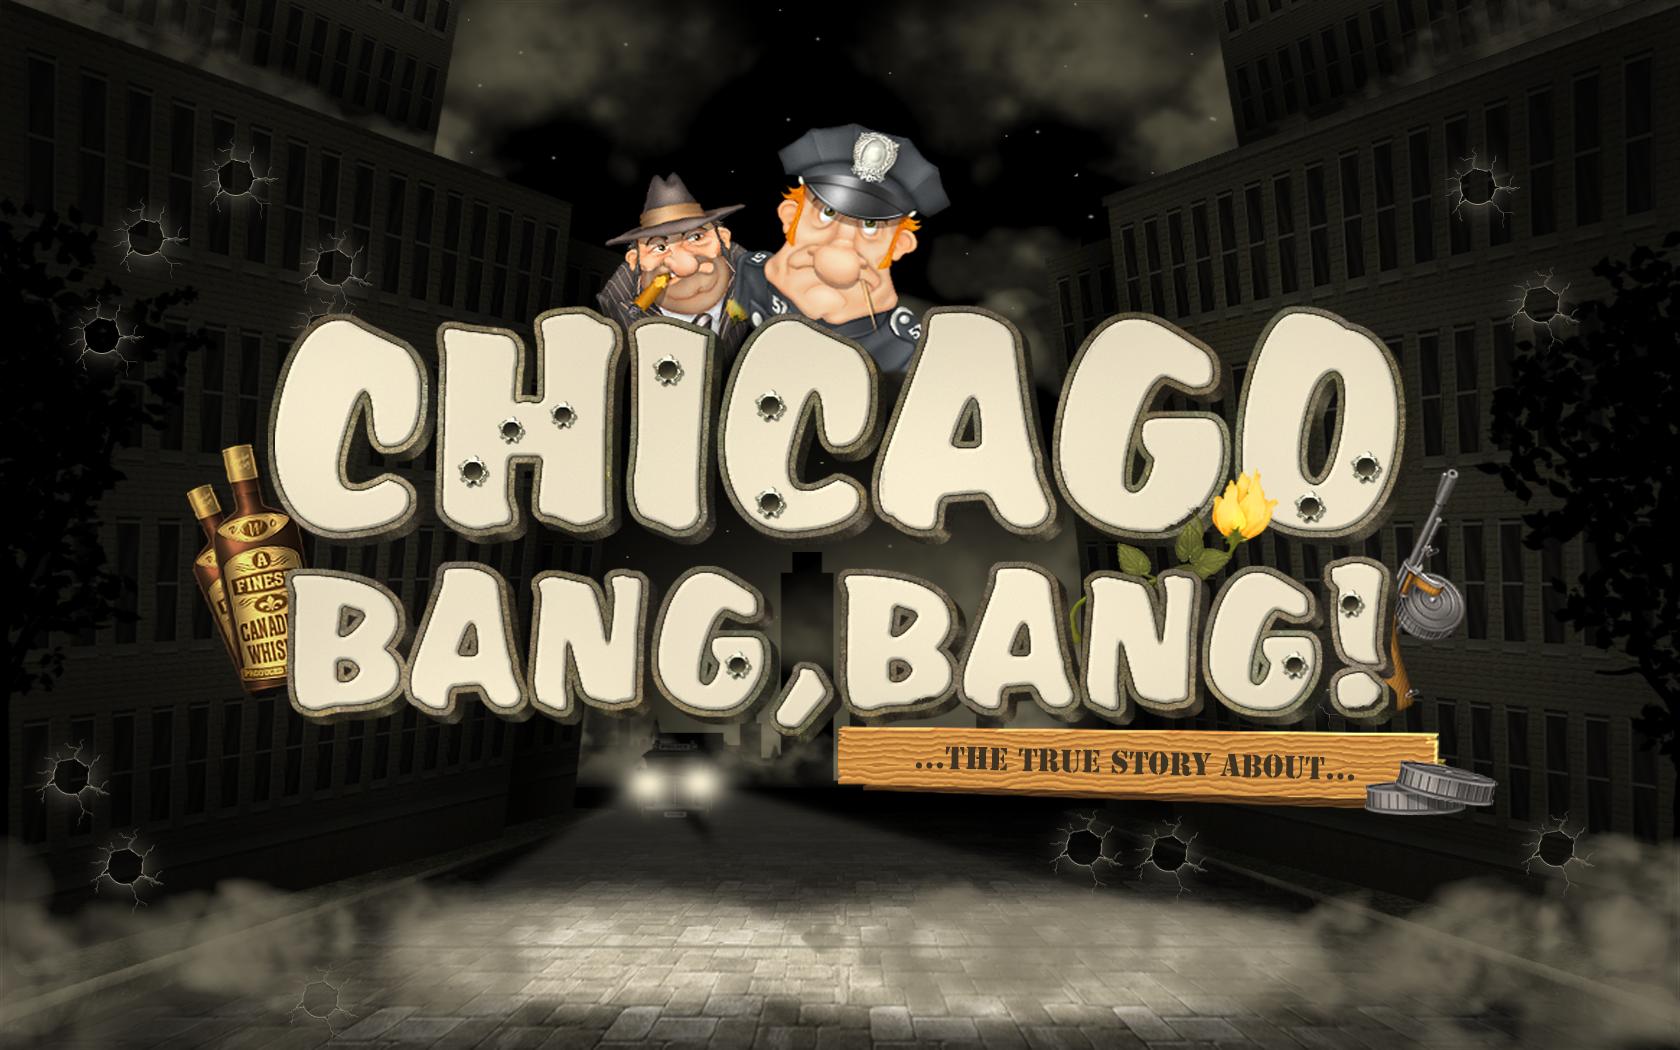 Chicago Bang, Bang! | Промо-материалы | Игровой автомат онлайн